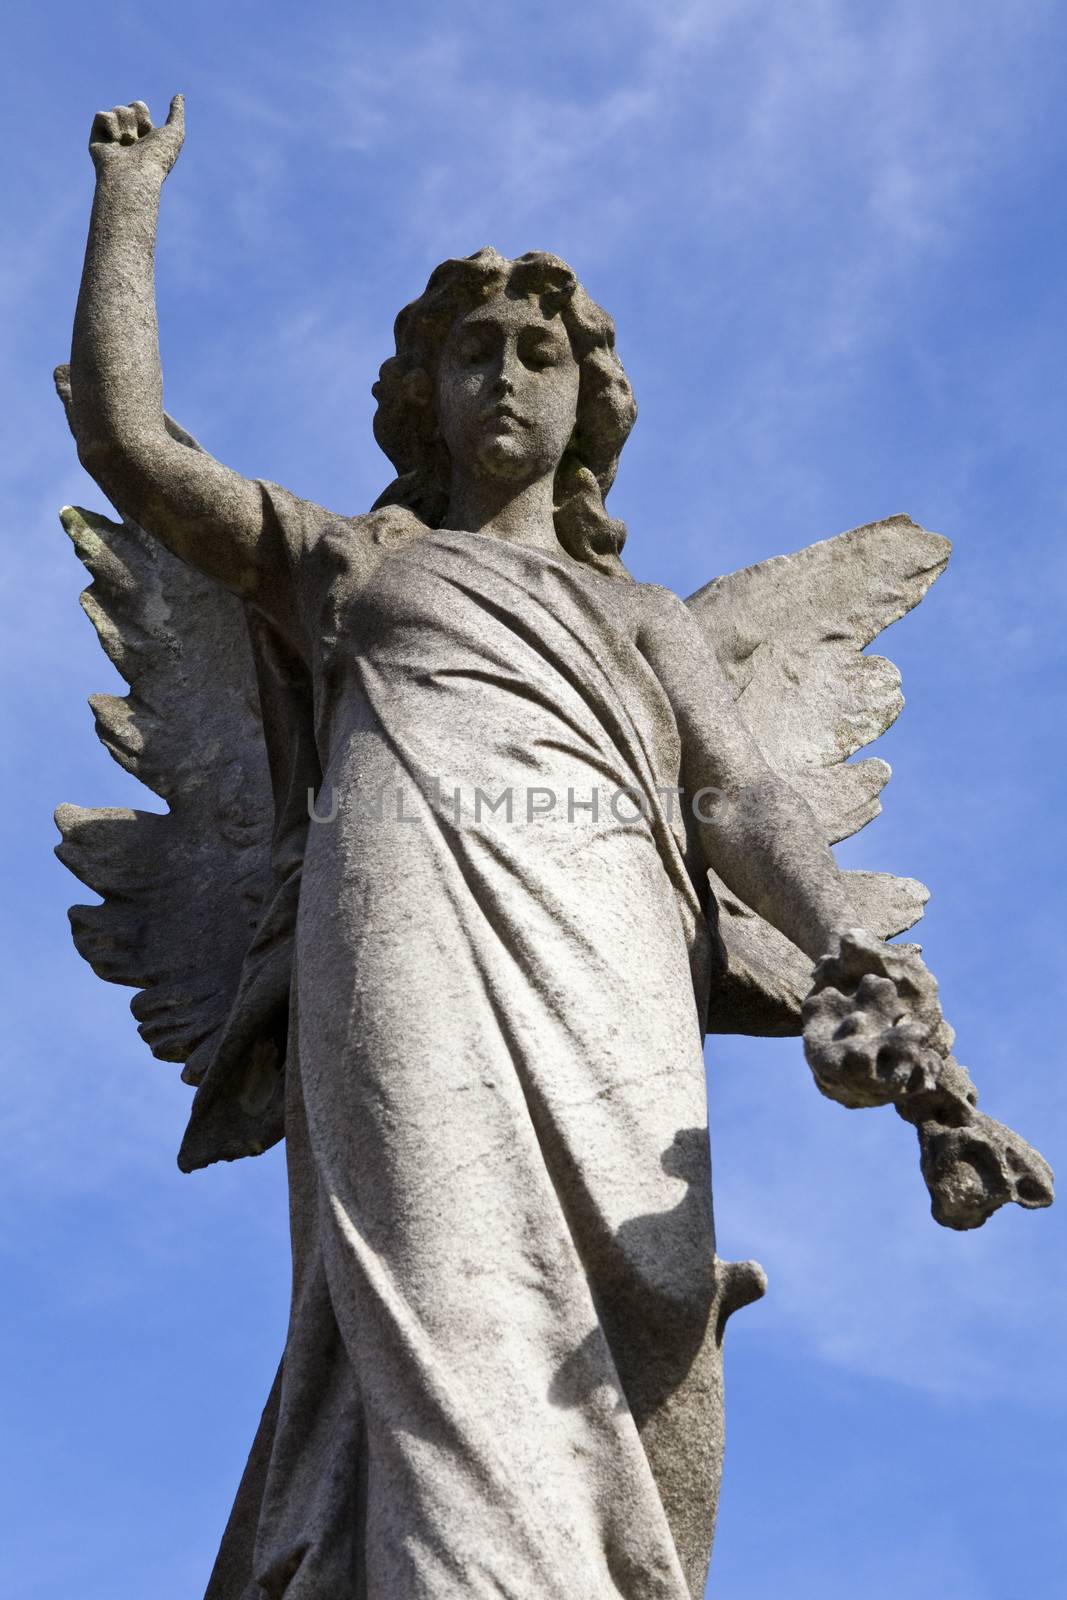 An Angel statue in a London graveyard.